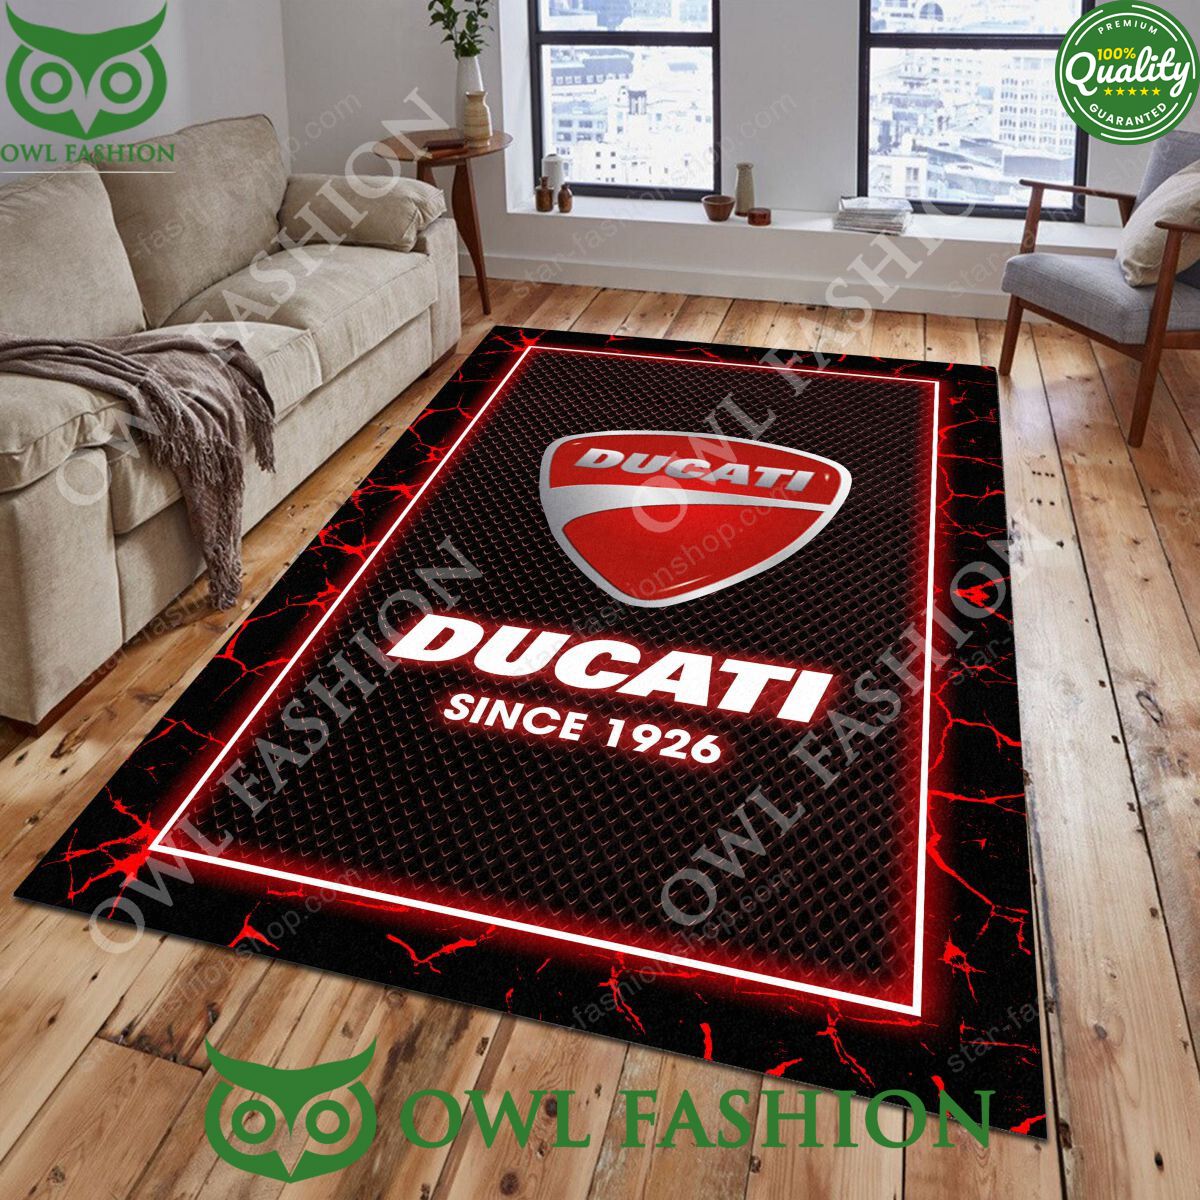 Motorcycle Brand Ducati Trending Design Carpet Rug Best click of yours